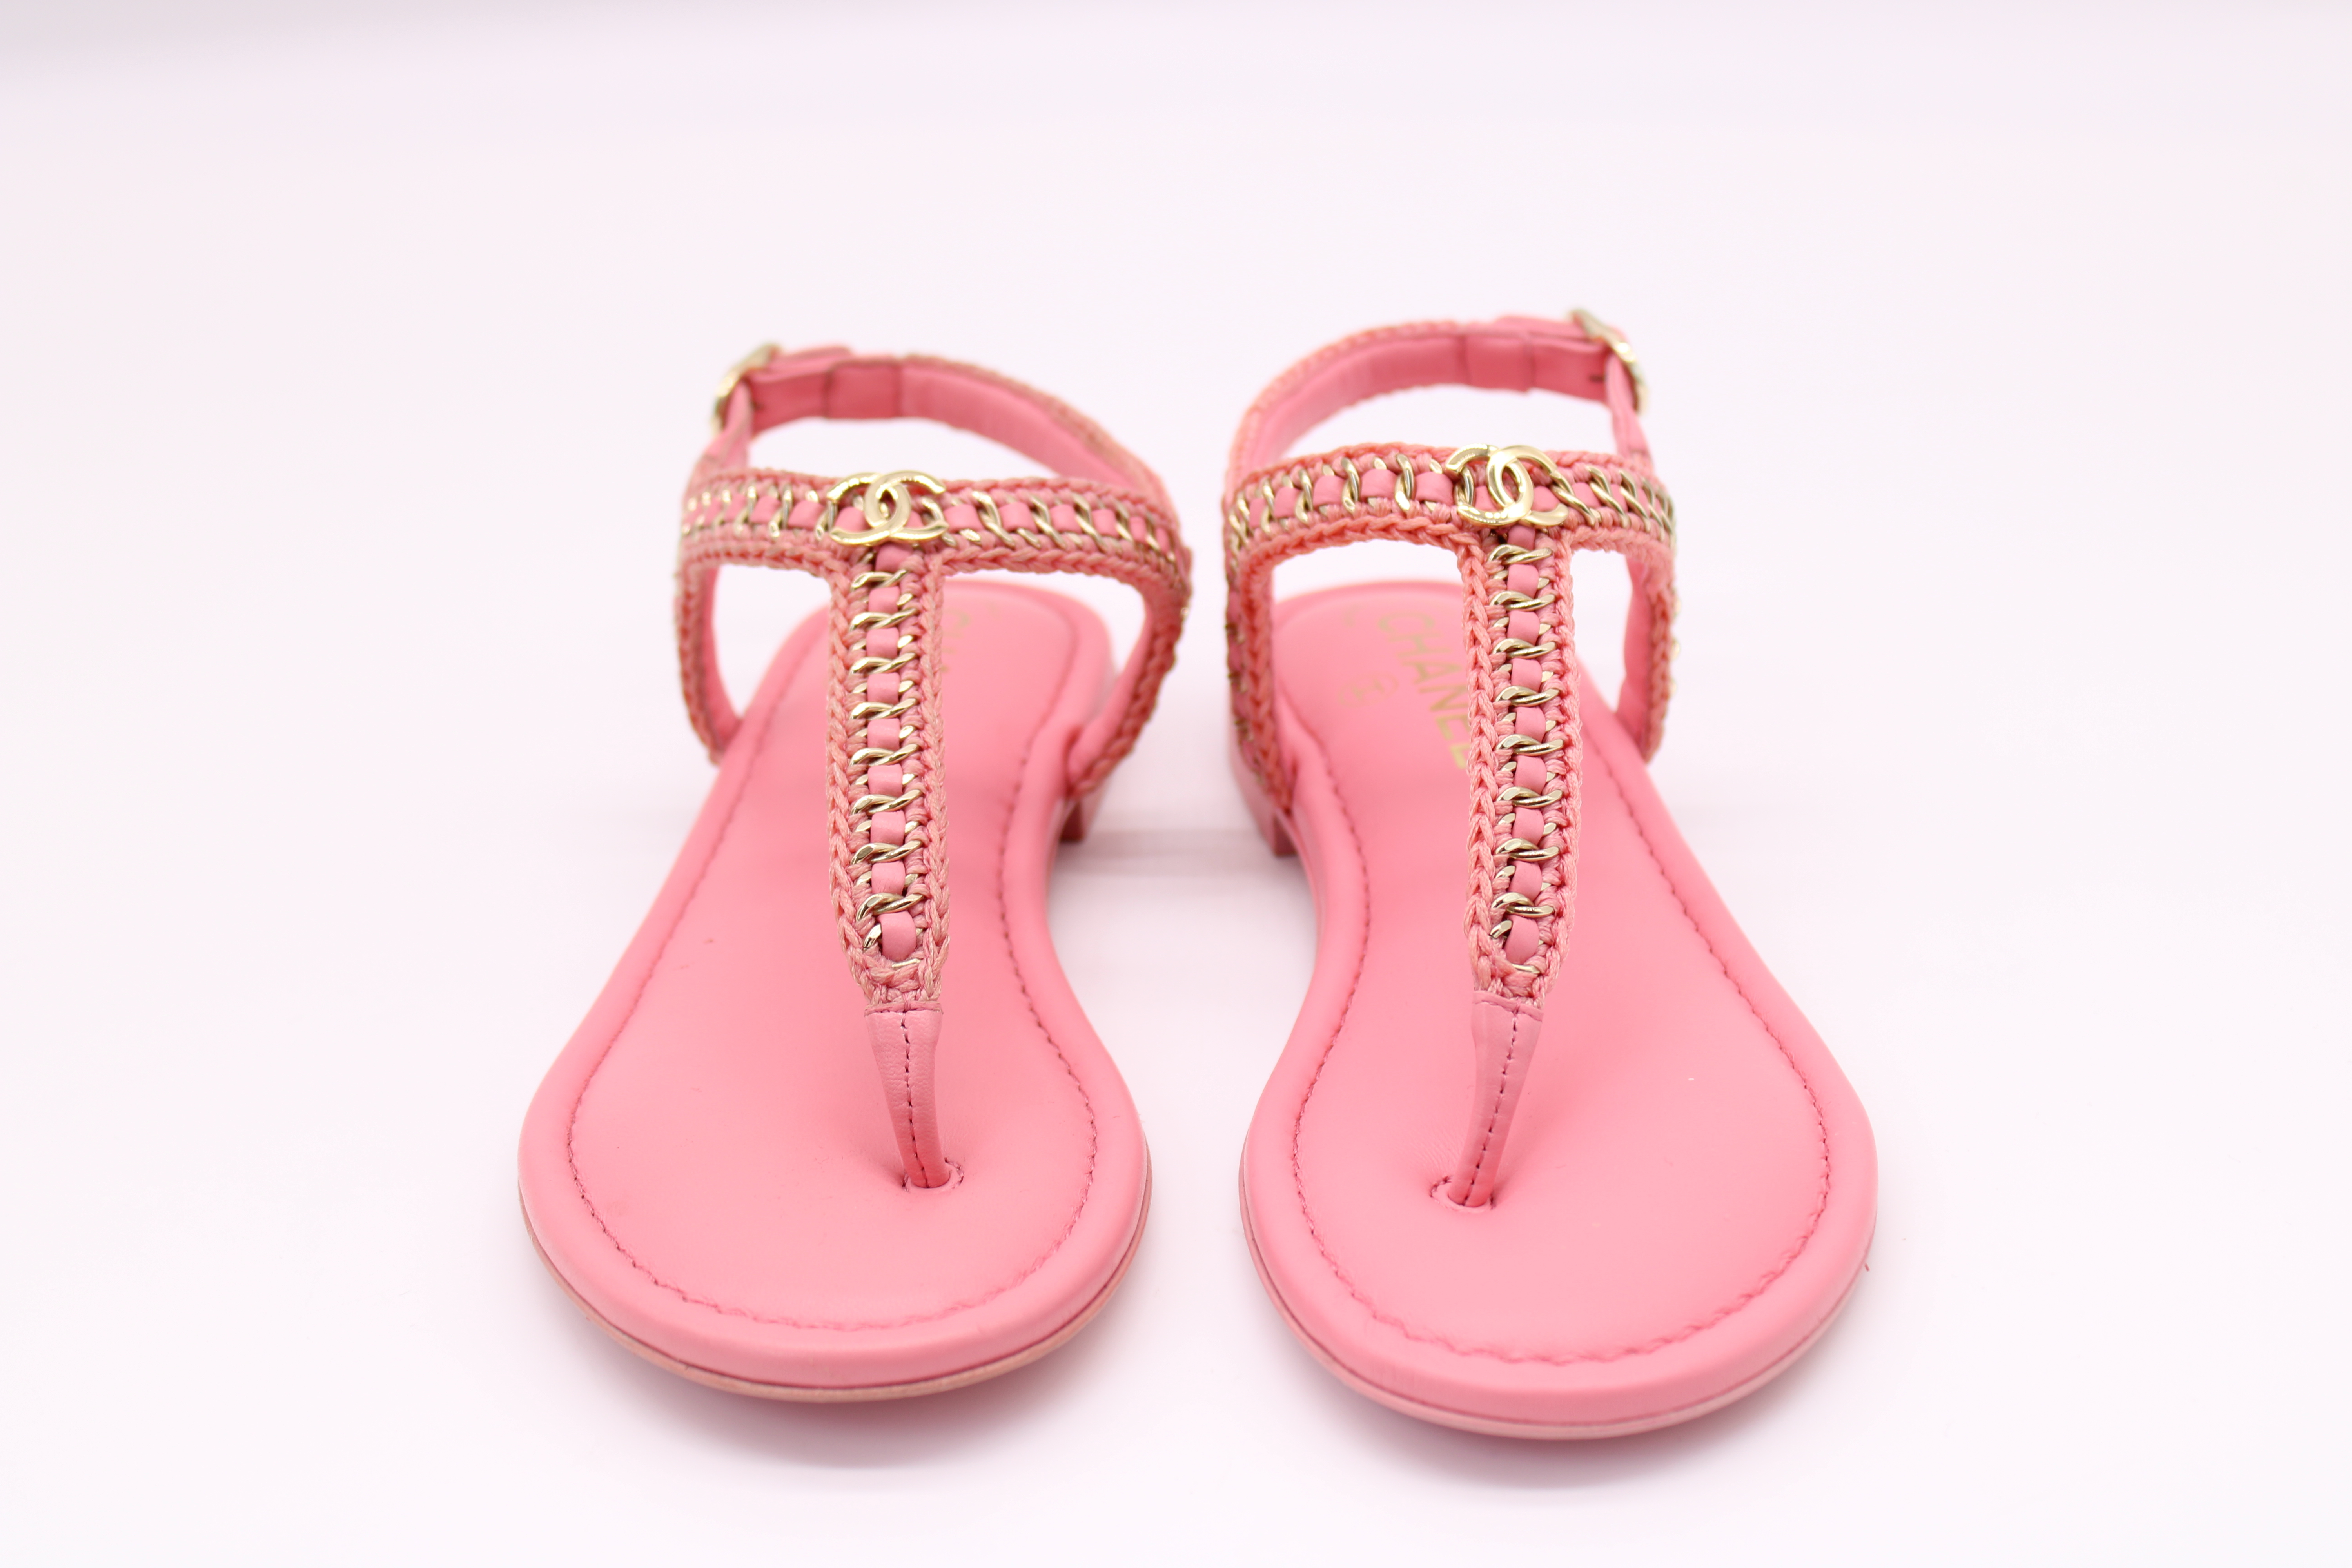 Chanel Shoe Flat Sandals, Pink, Size 36, New in Box MA001 - Julia Rose  Boston